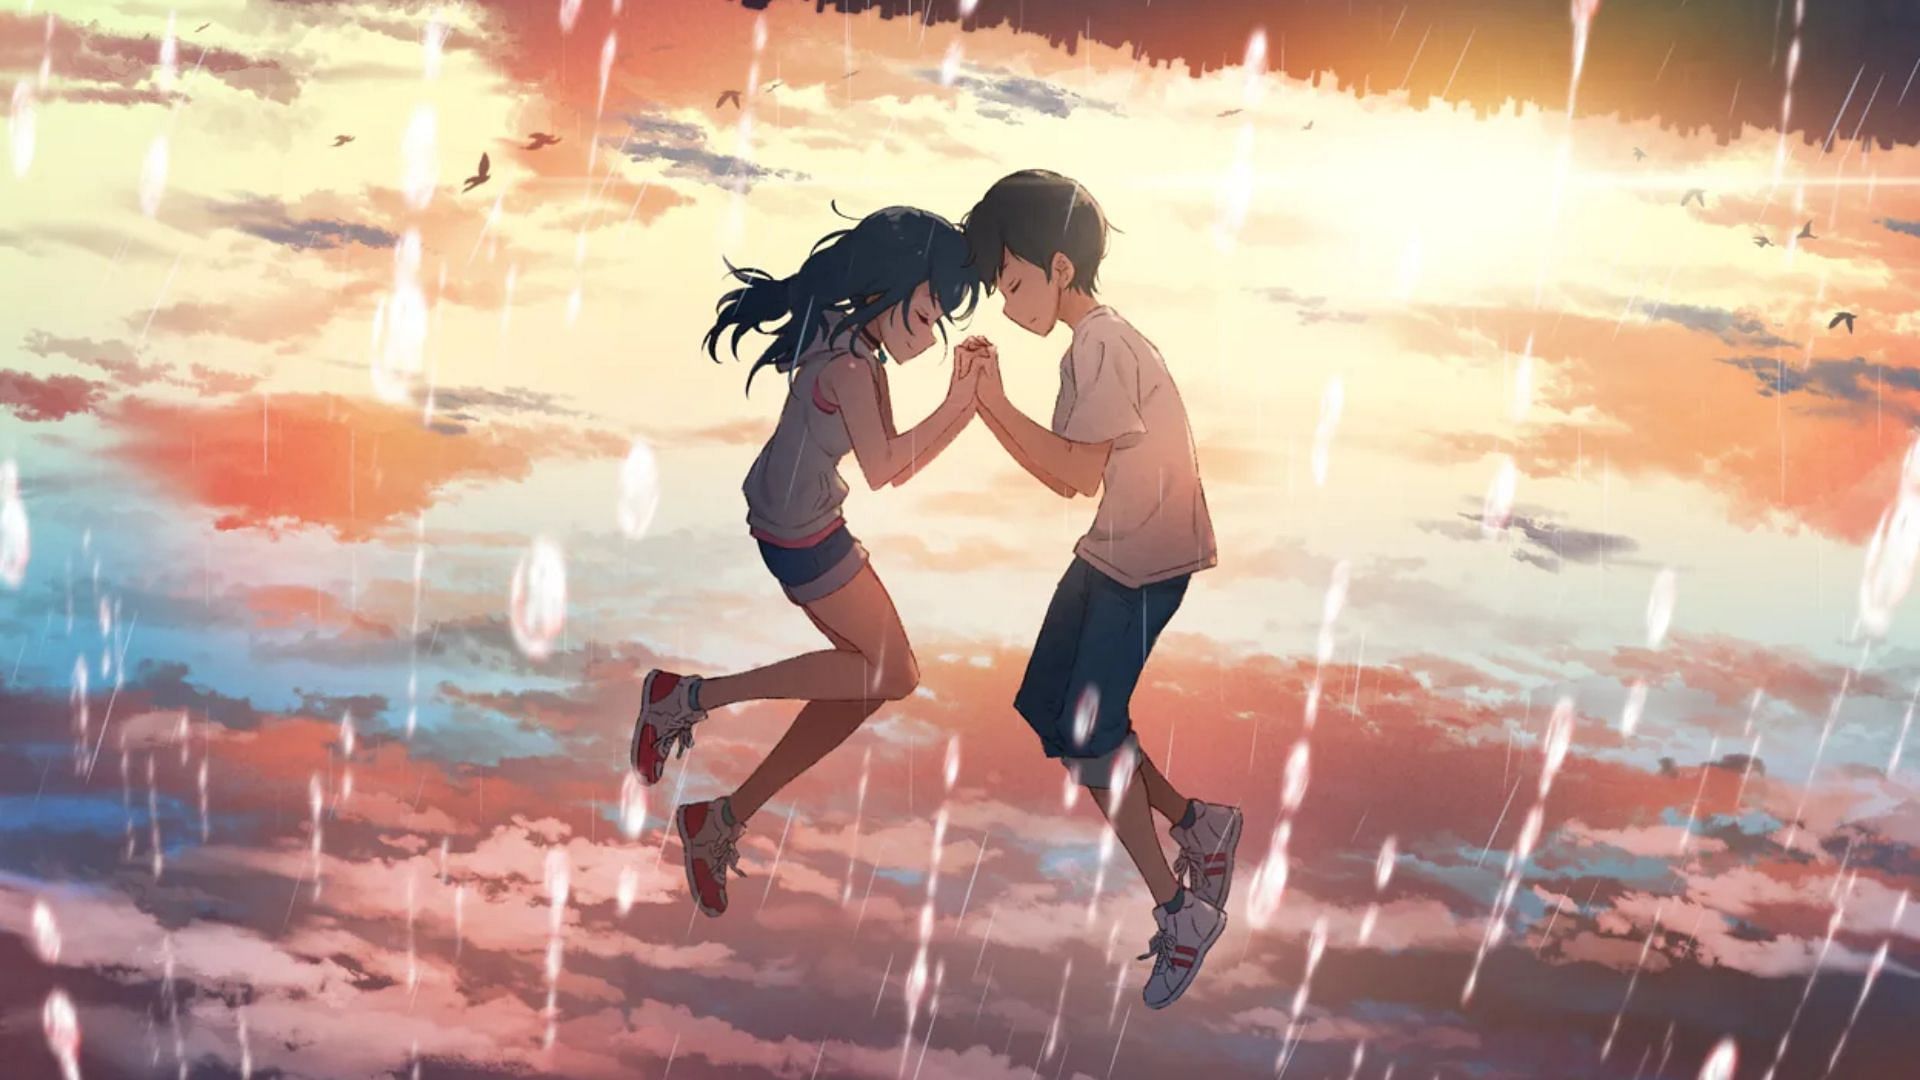 Hina and Hodaka as seen in Weathering With You (Image credits: Makoto Shinkai/ Comix Wave)